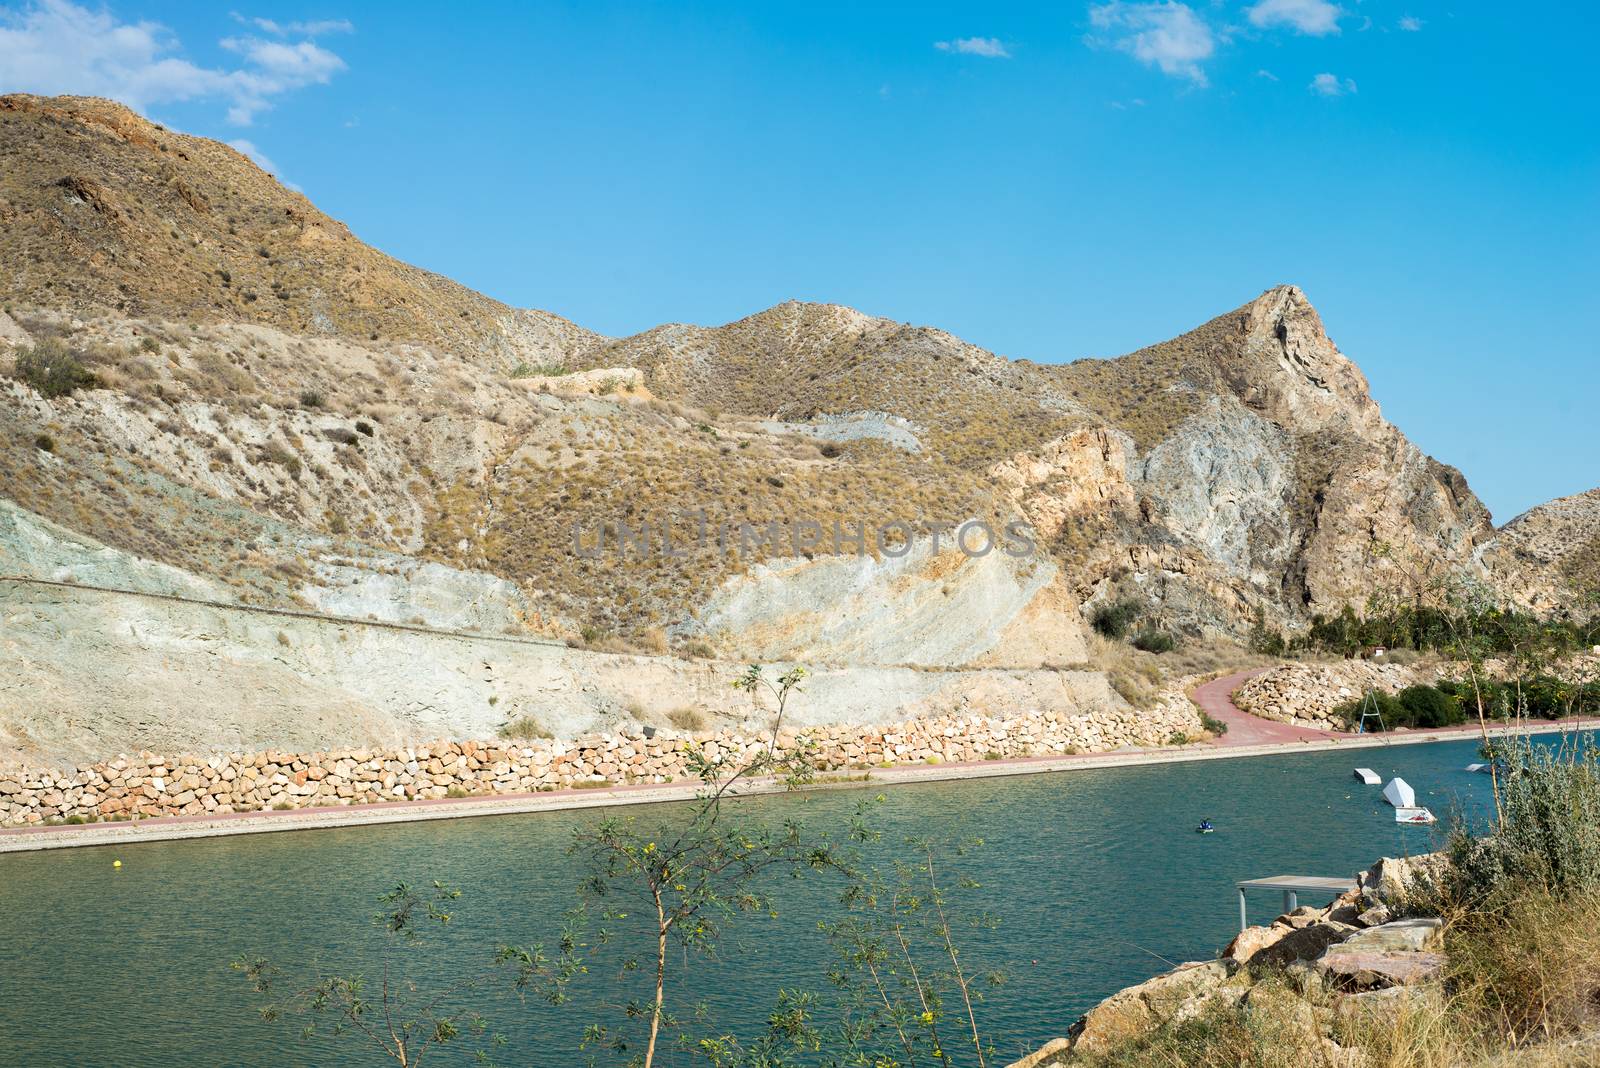 View on the Cuevas del Almanzora reservoir by anytka